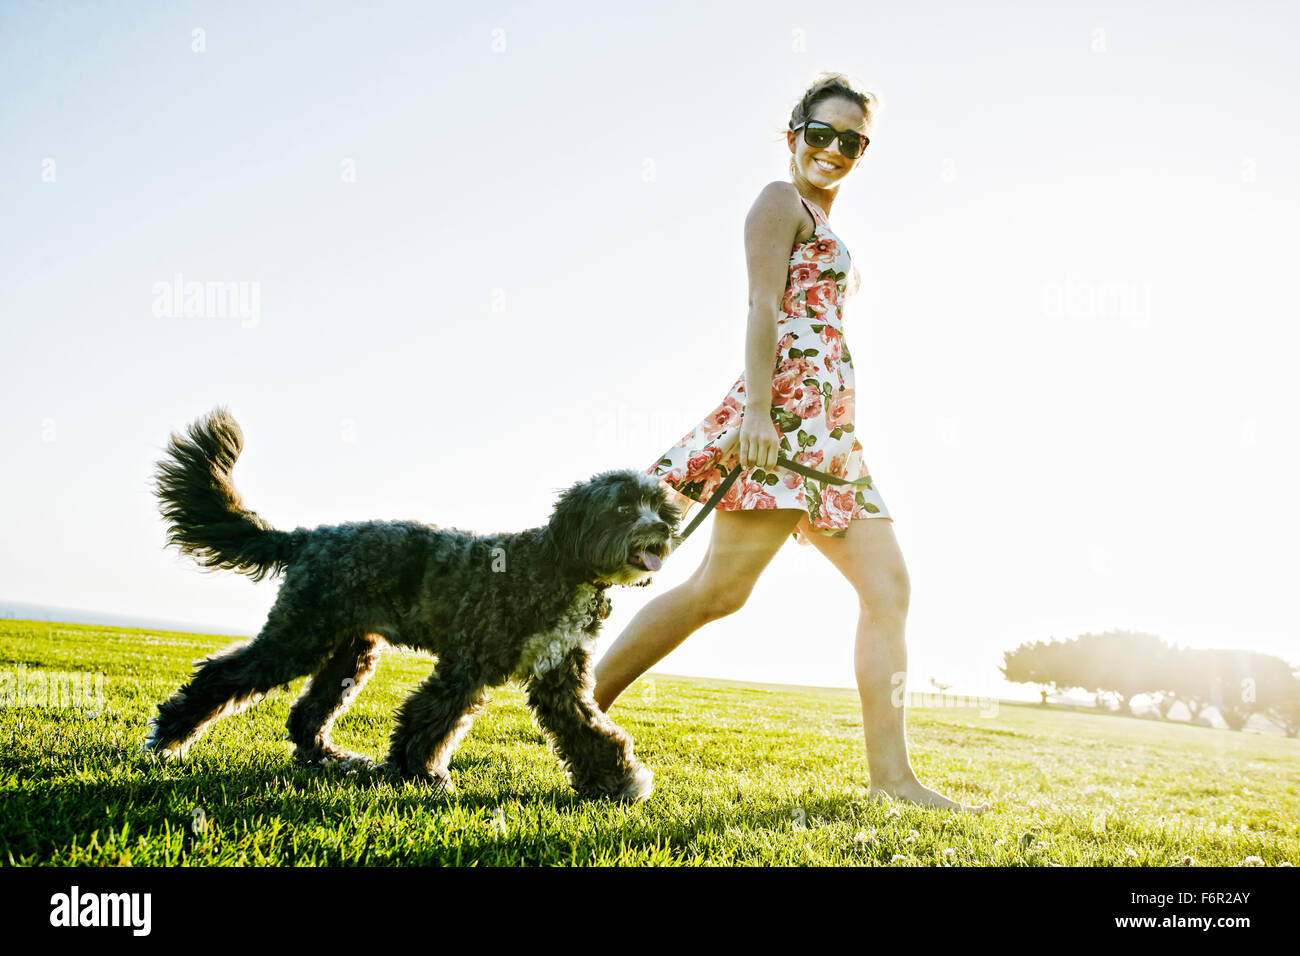 Caucasian woman walking dog in field Stock Photo